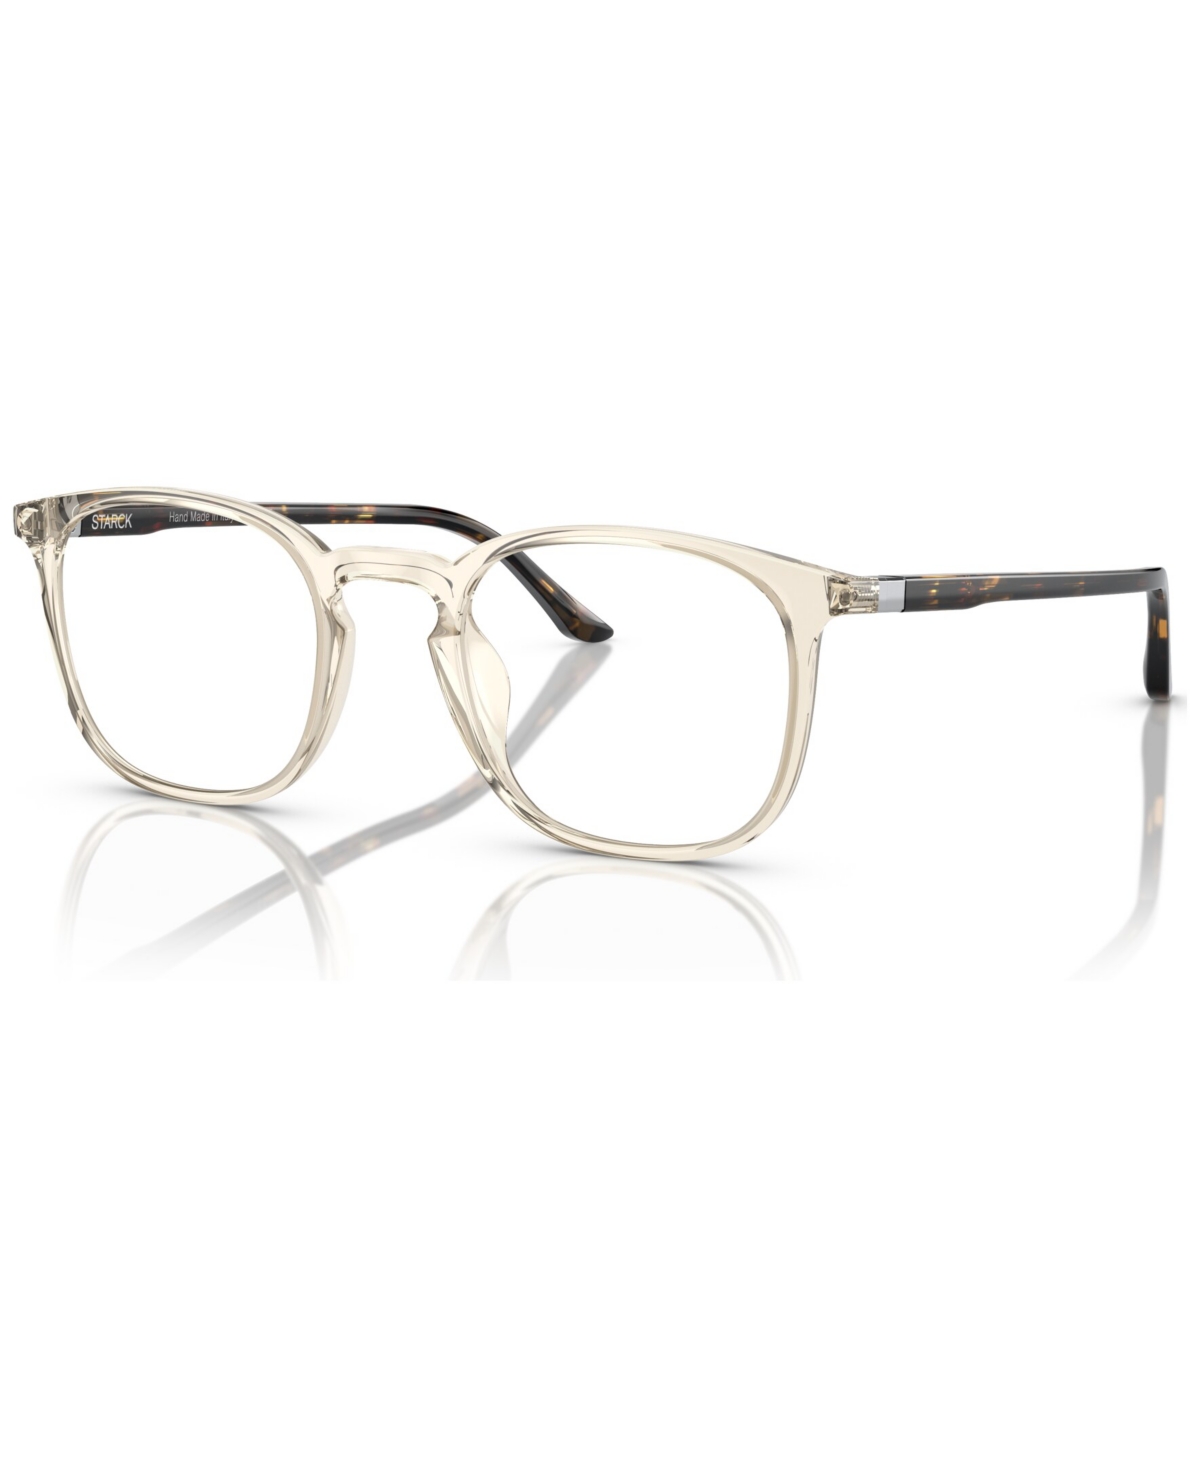 Men's Eyeglasses, SH3088 49 - Crystal